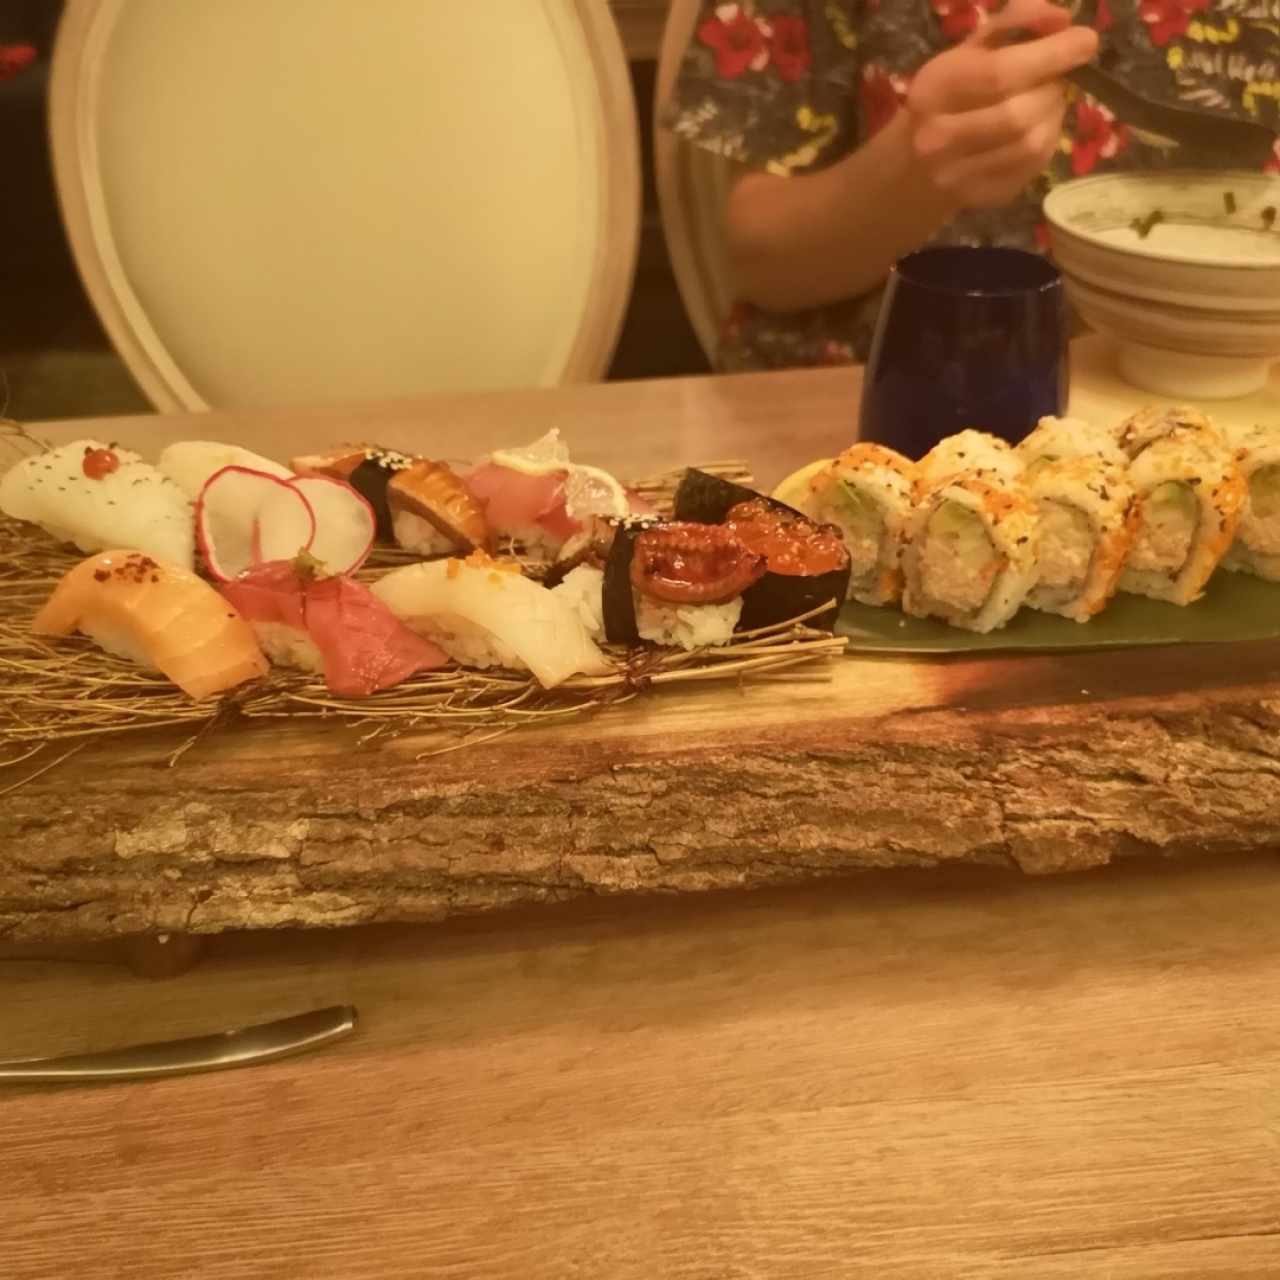 sushi sampler